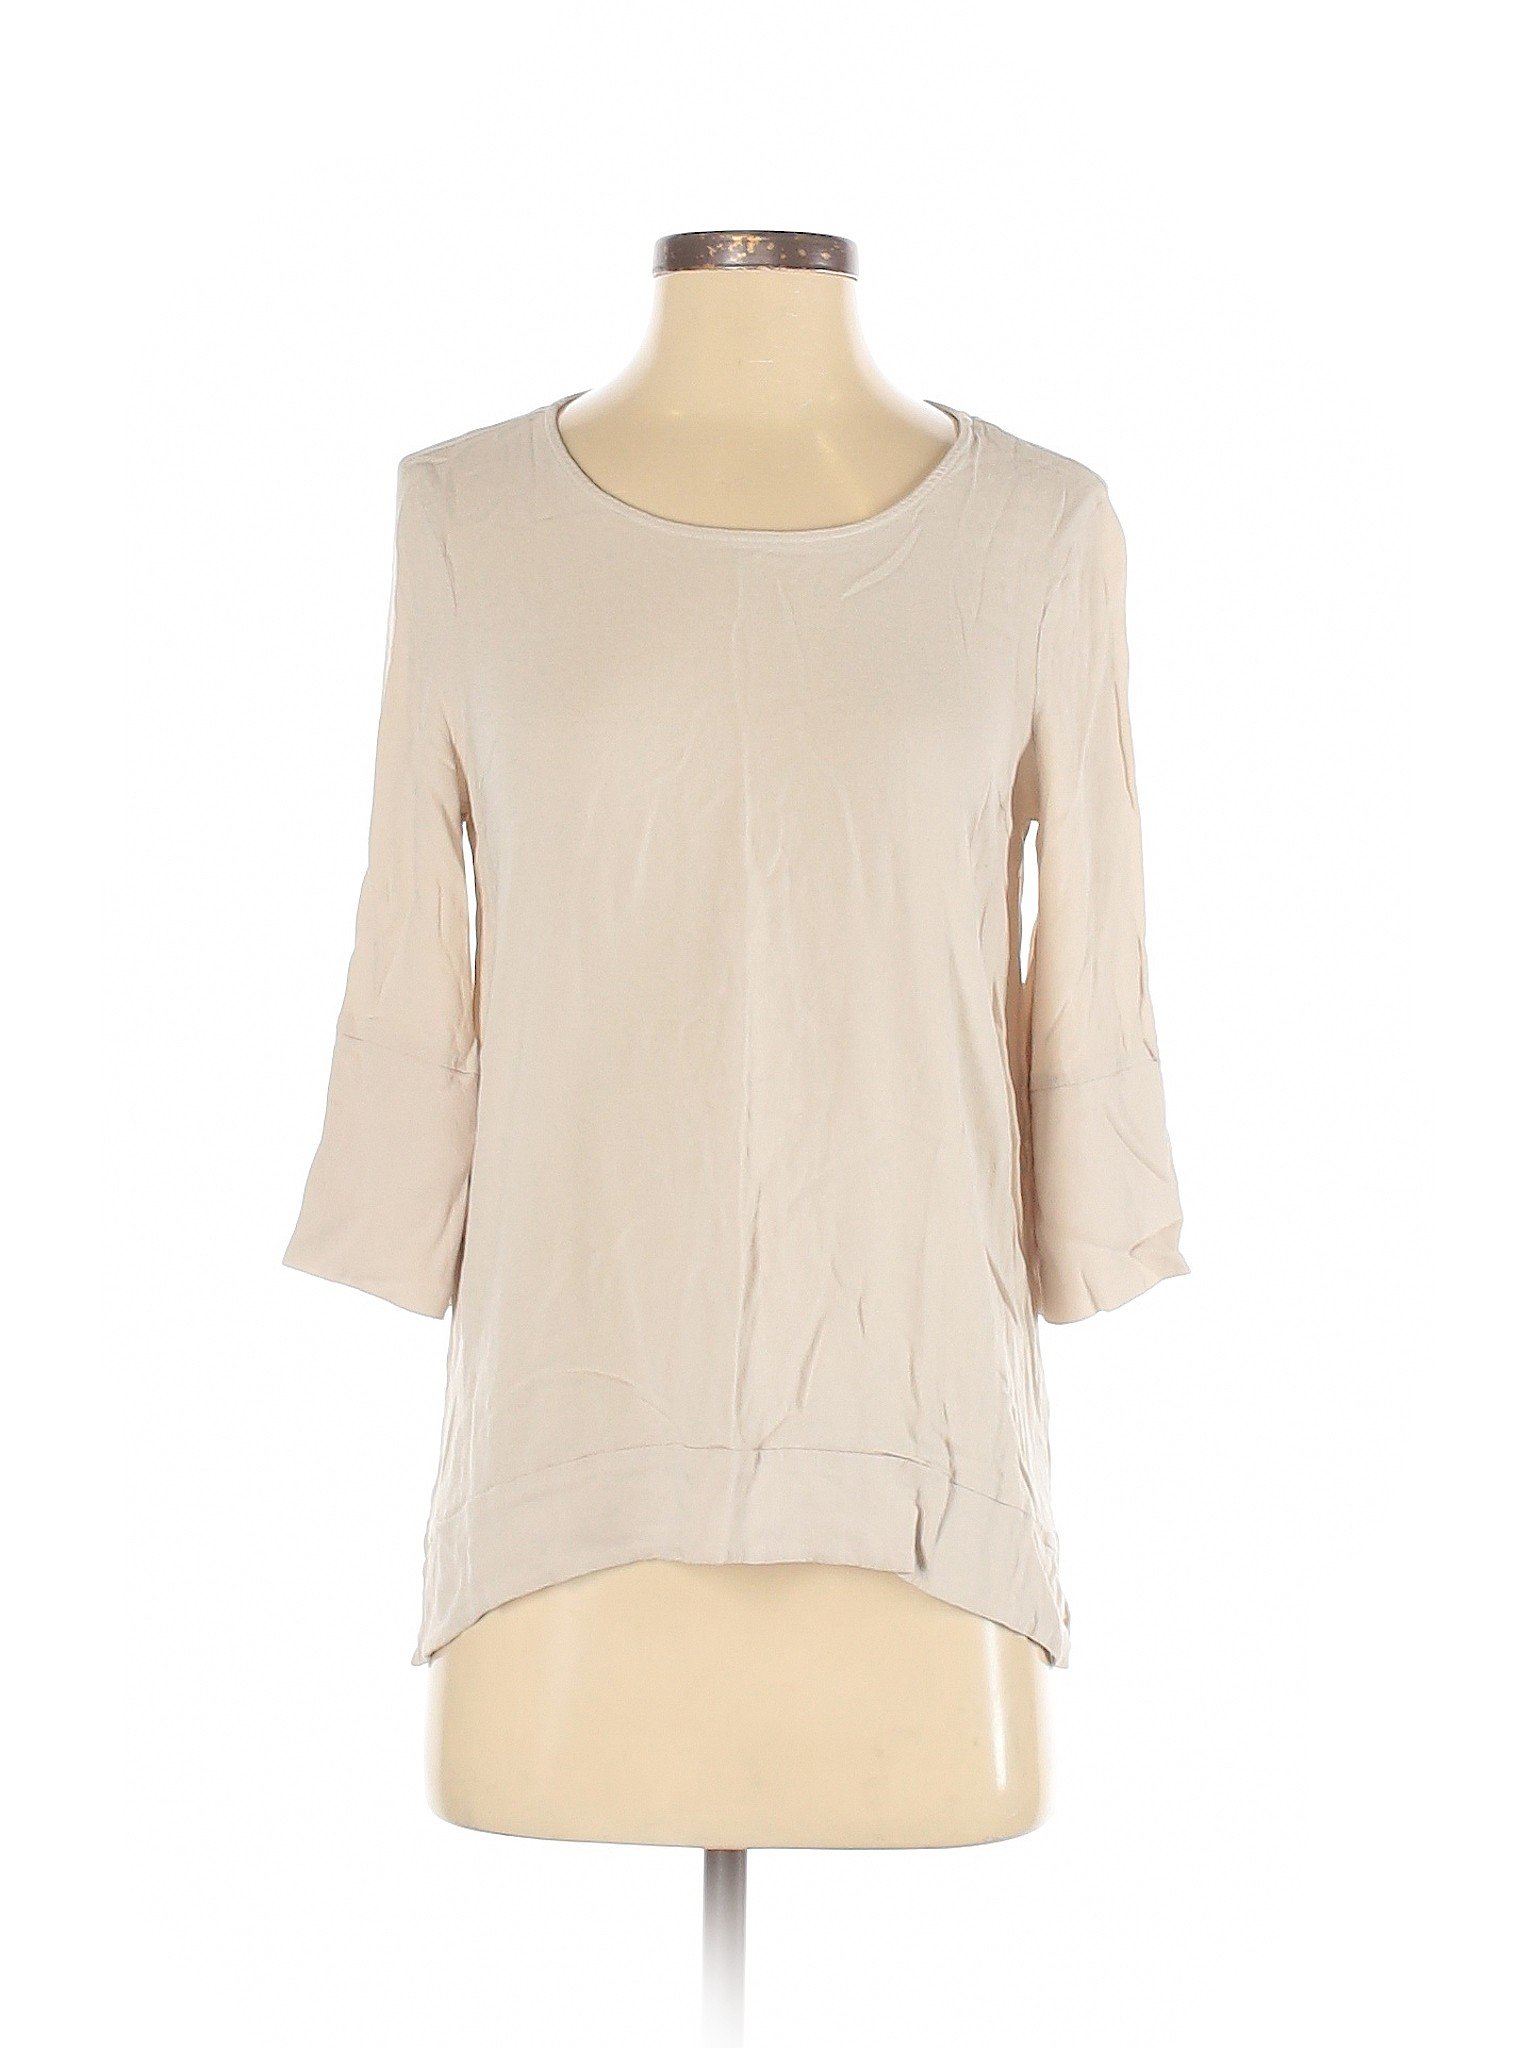 Downeast Women Brown 3/4 Sleeve Blouse S | eBay